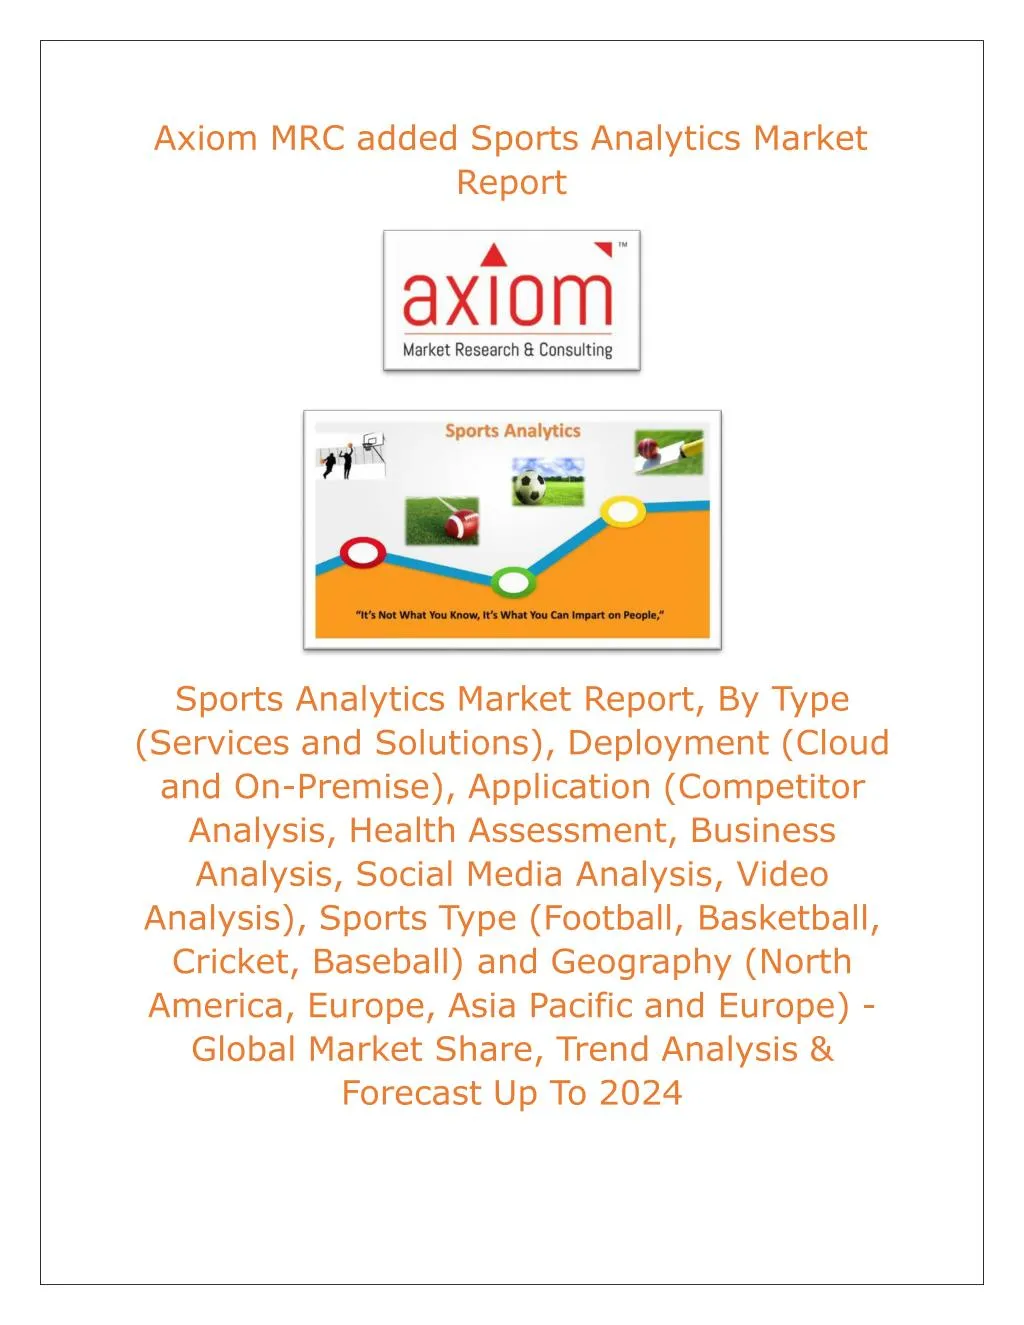 axiom mrc added sports analytics market report